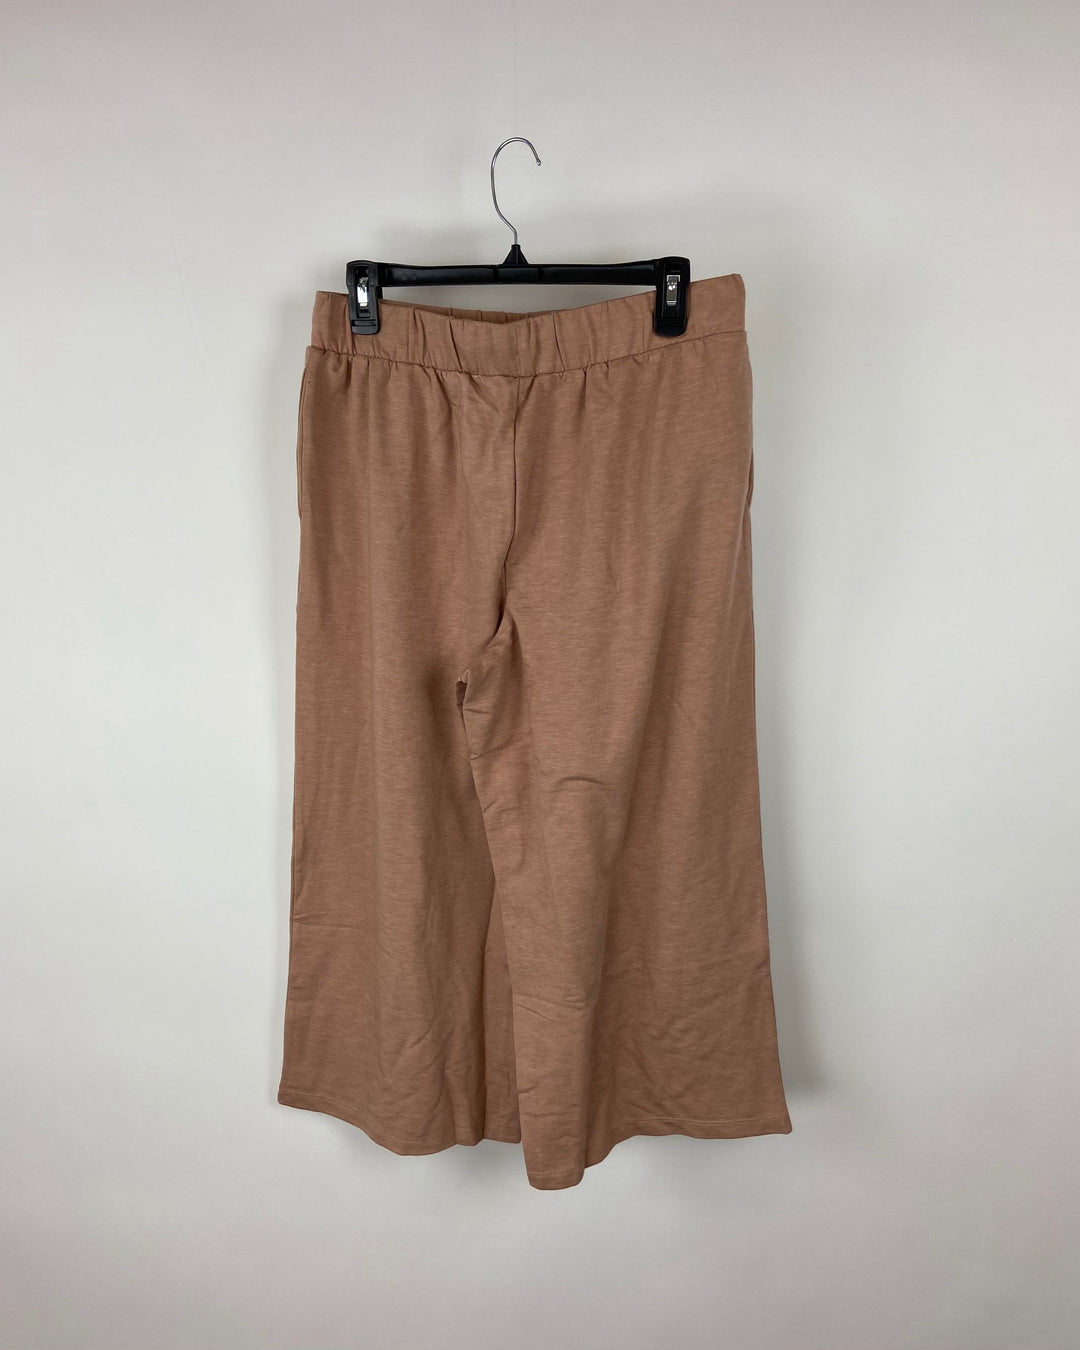 Tan Cropped Sweatpants - Small